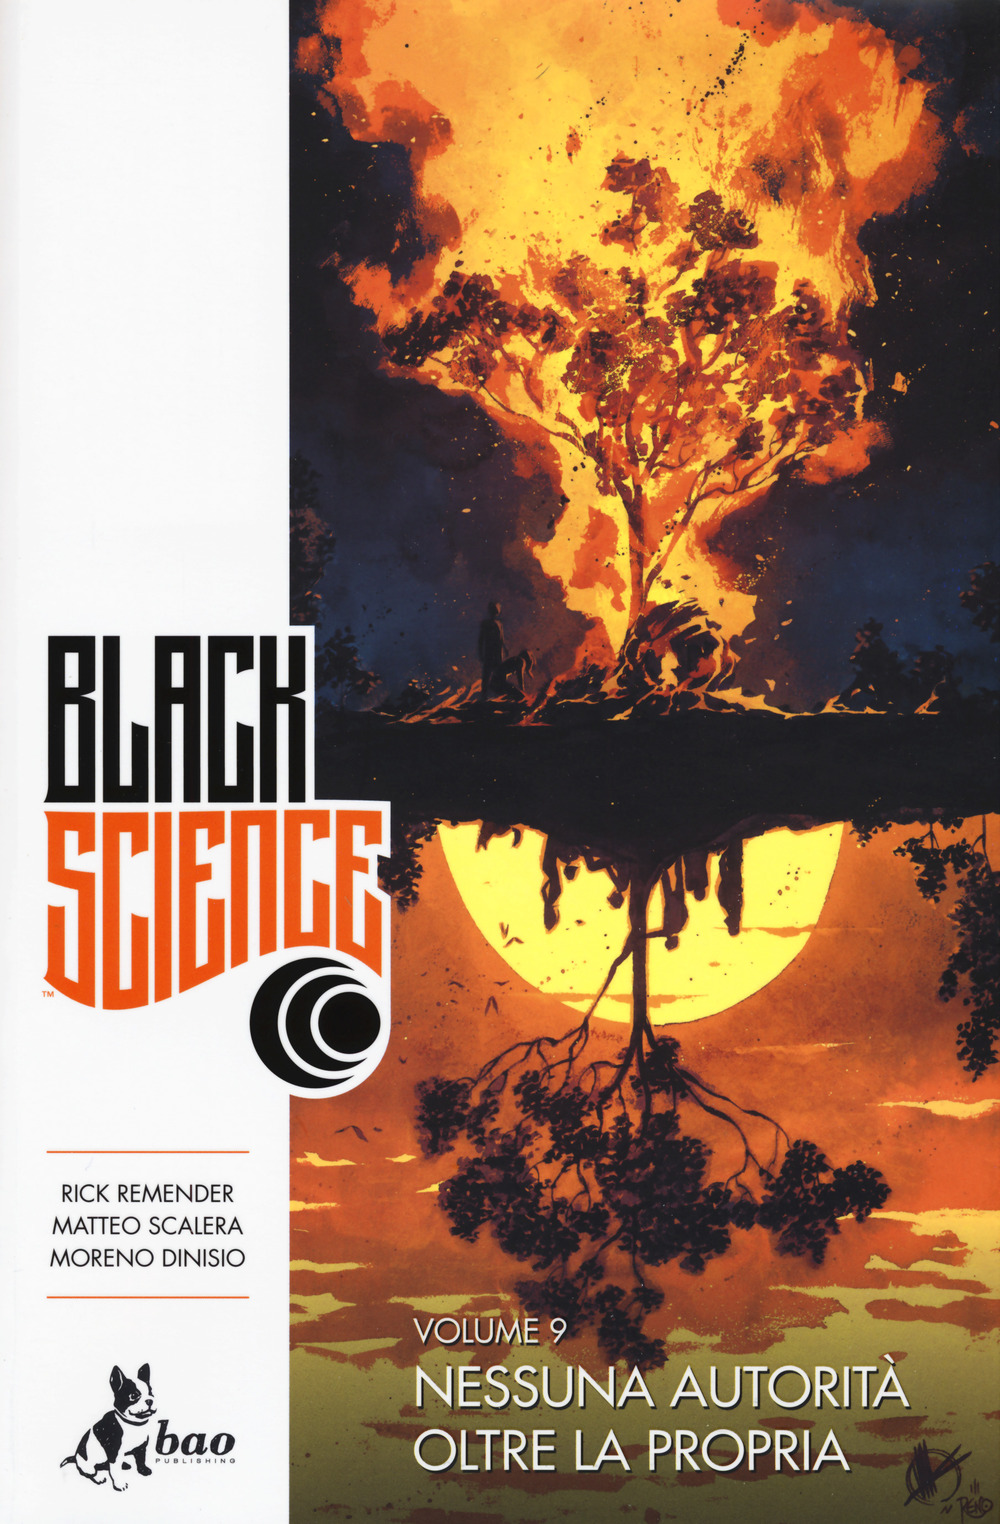 Rick Remender / Matteo Scalera / Moreno Dinisio - Black Science #09